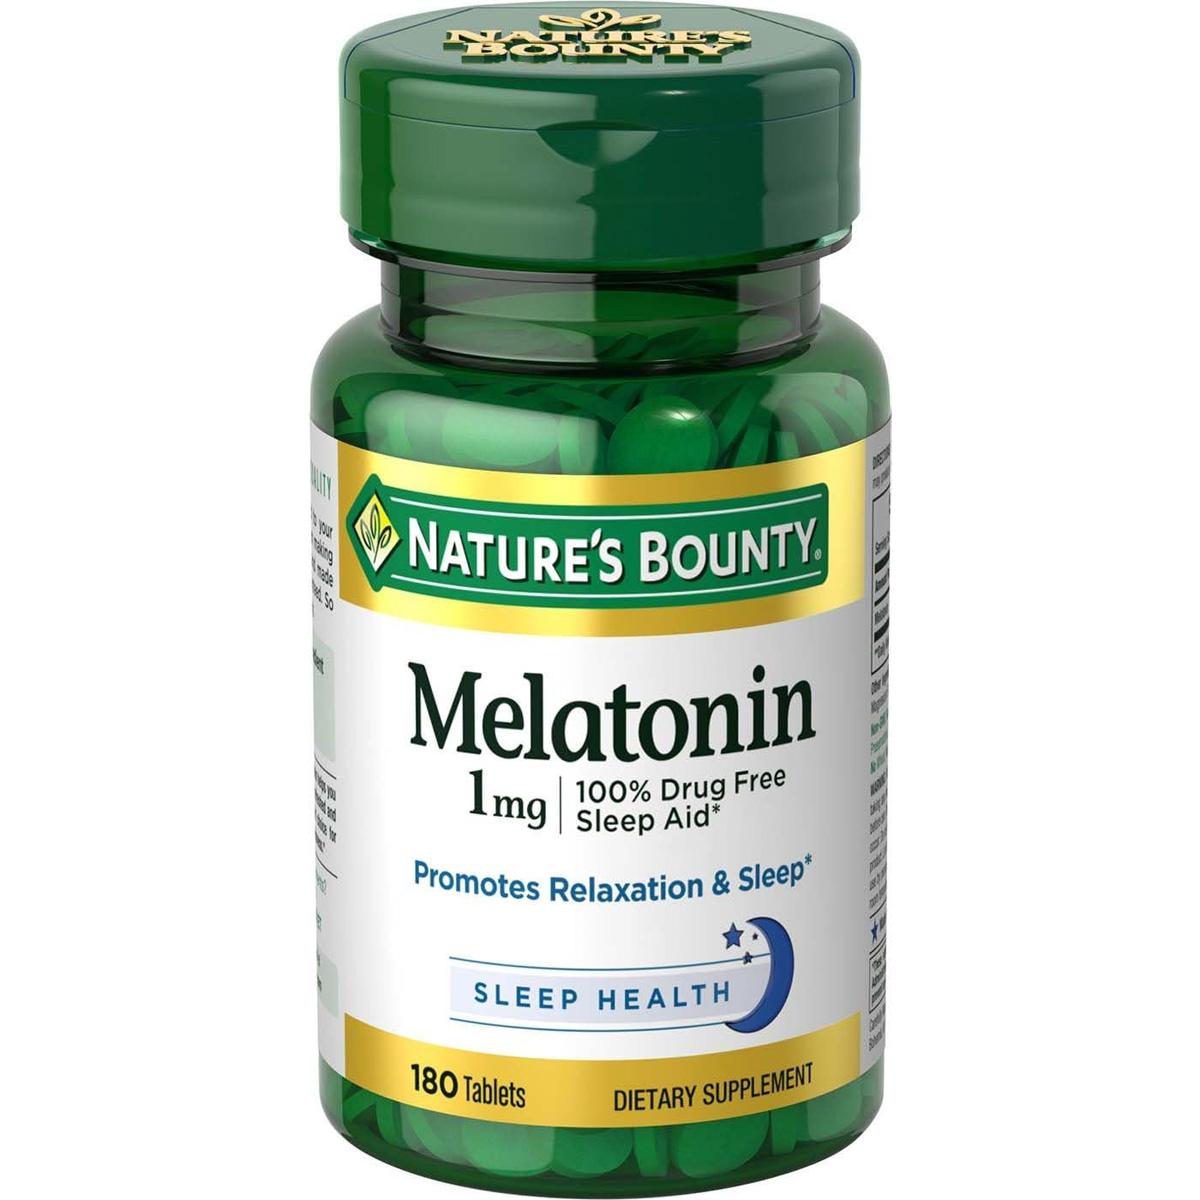 Natures Bounty Melatonin Sleep Aid Tablets 180 Pack for $2.79